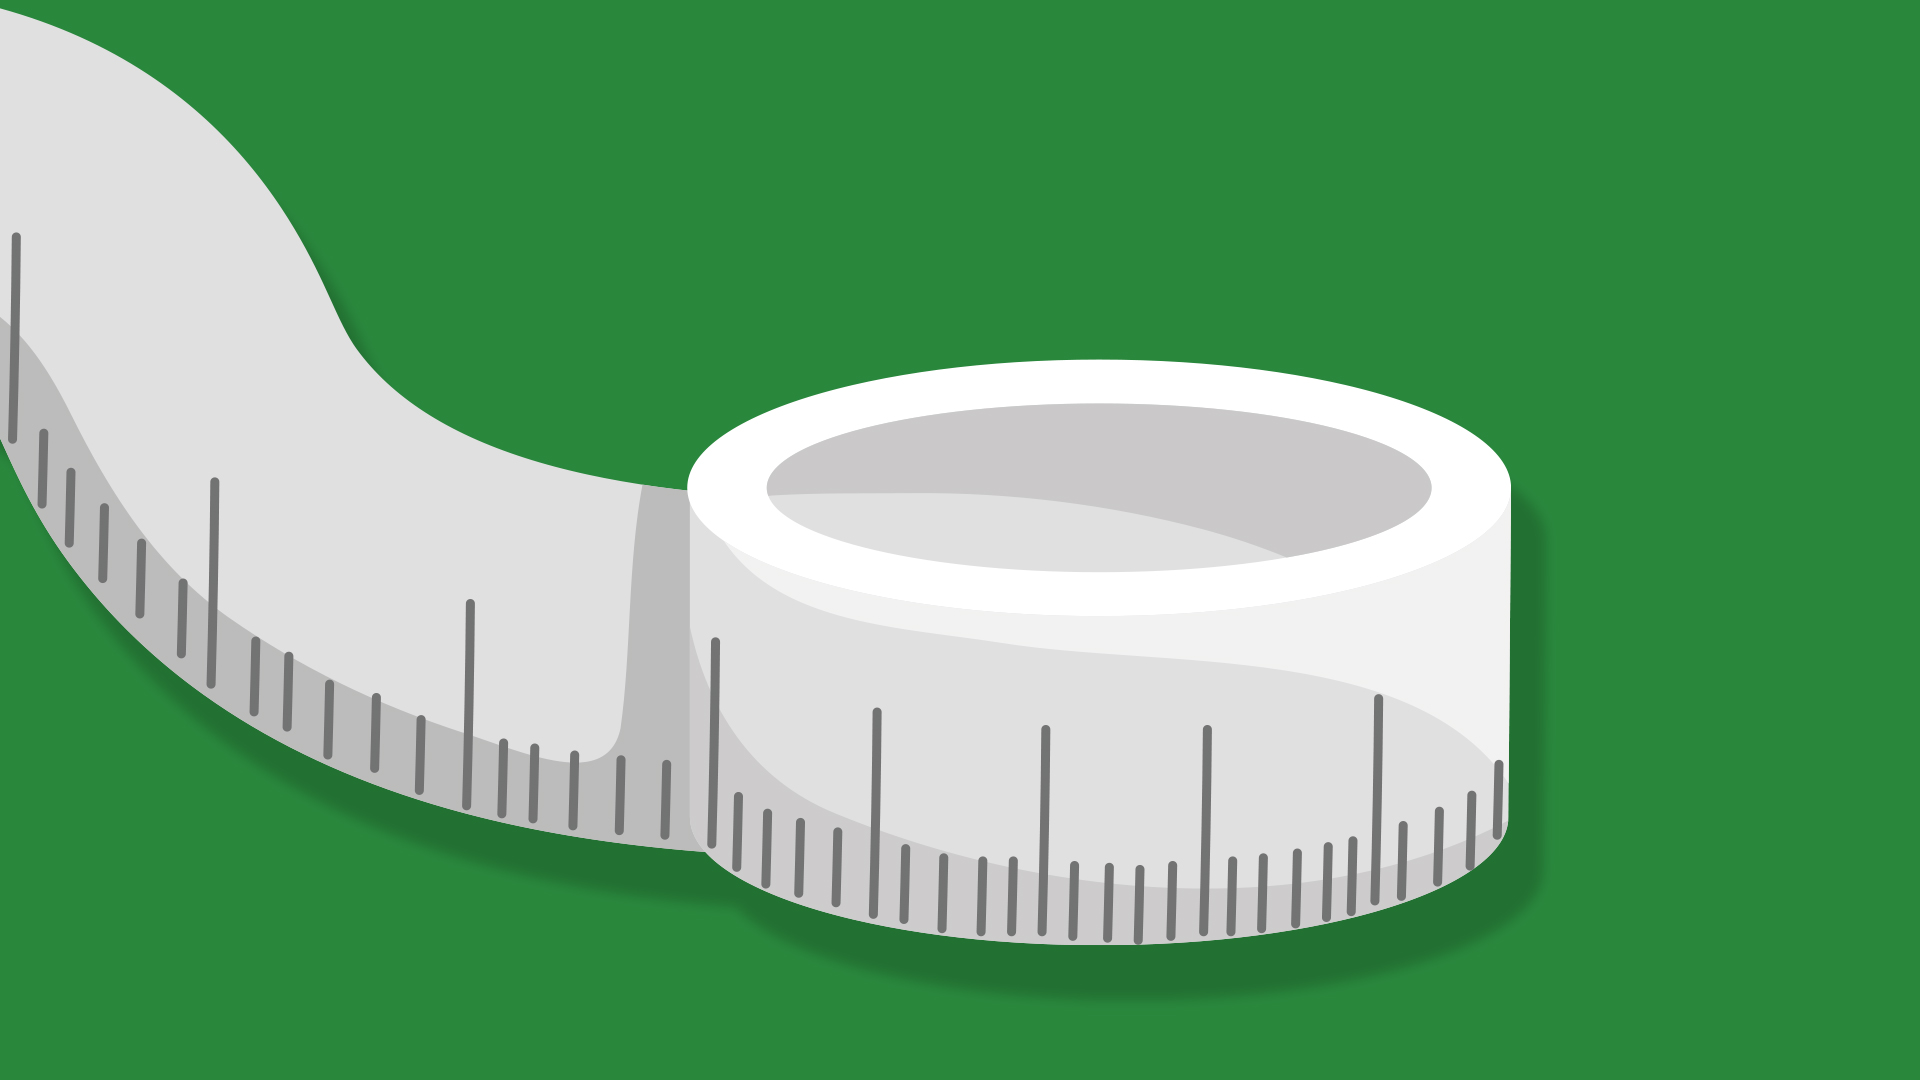 Leather Tape Measure Cartoon Cute Measuring Waist Circumference